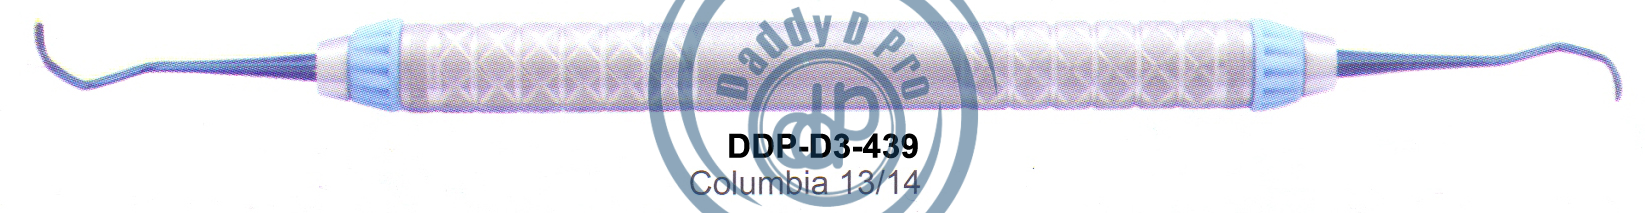 images/DDP-D3-439.png